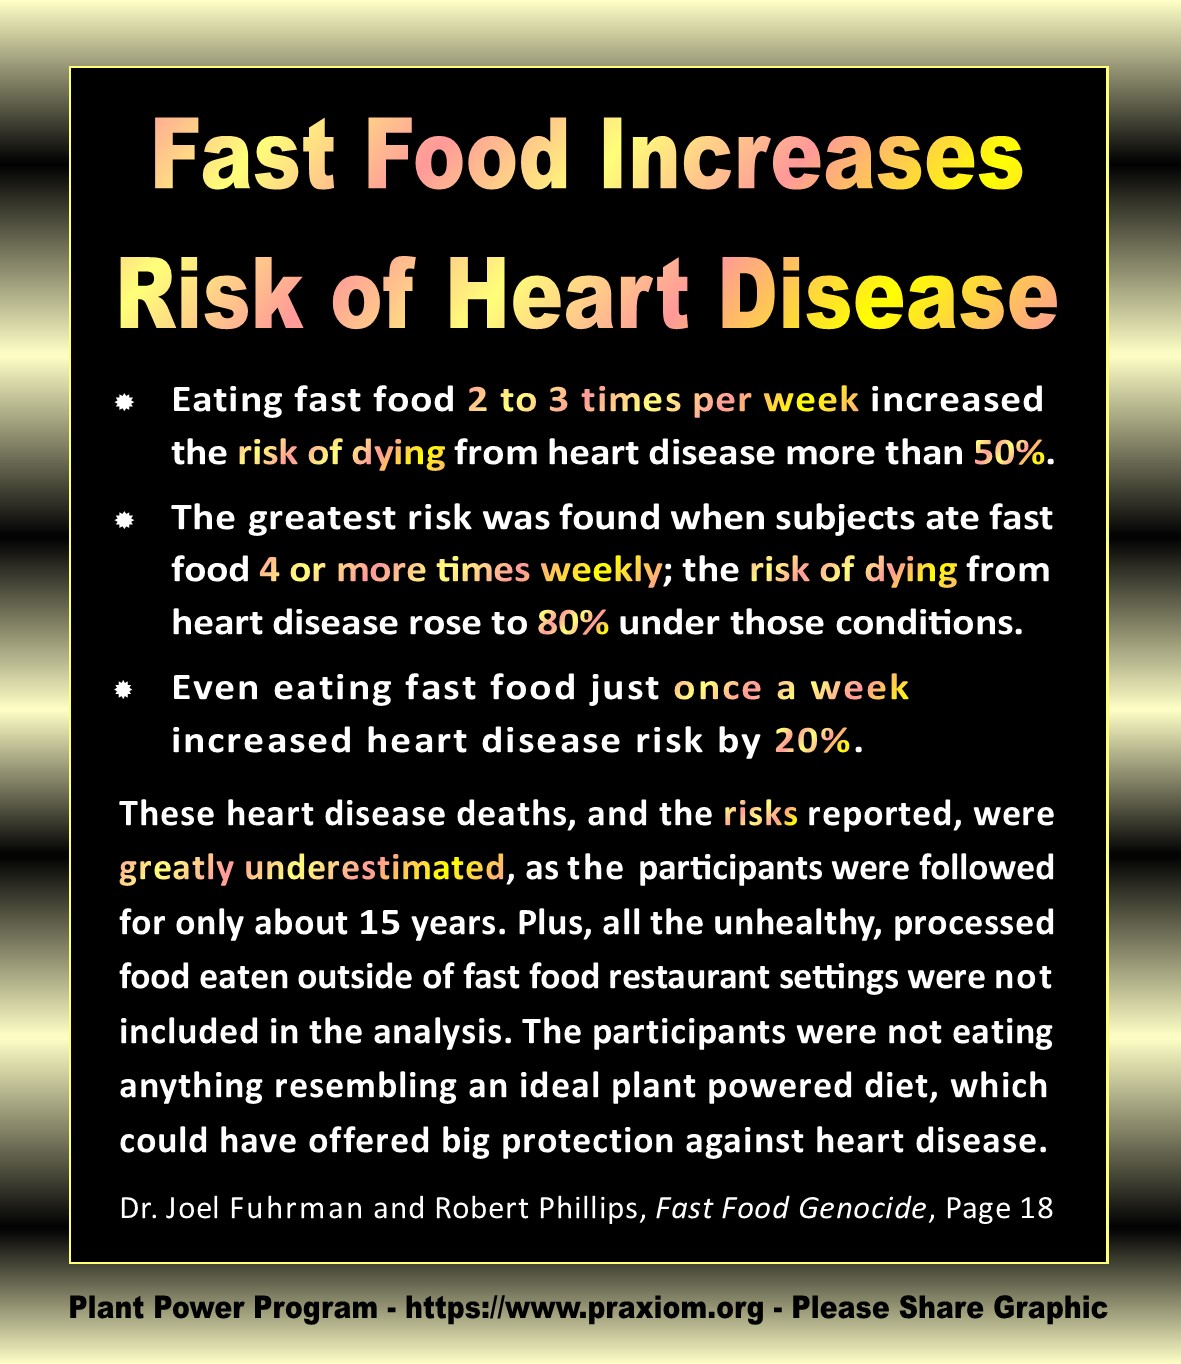 Fast Food Increases Risk of Heart Disease - Dr. Joel Fuhrman